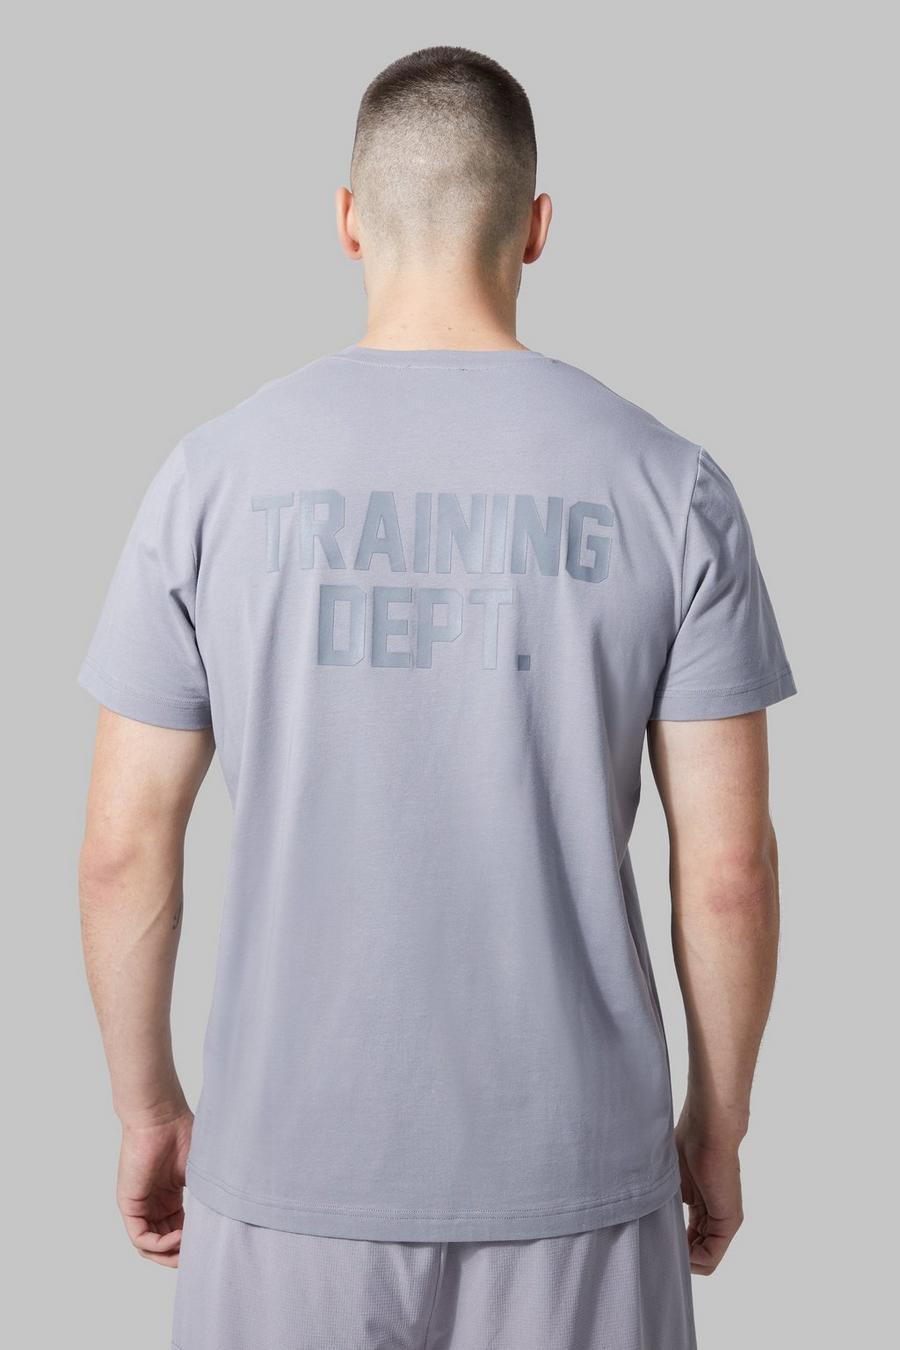 T-shirt Tall Active Training Dept per alta performance, Light grey image number 1